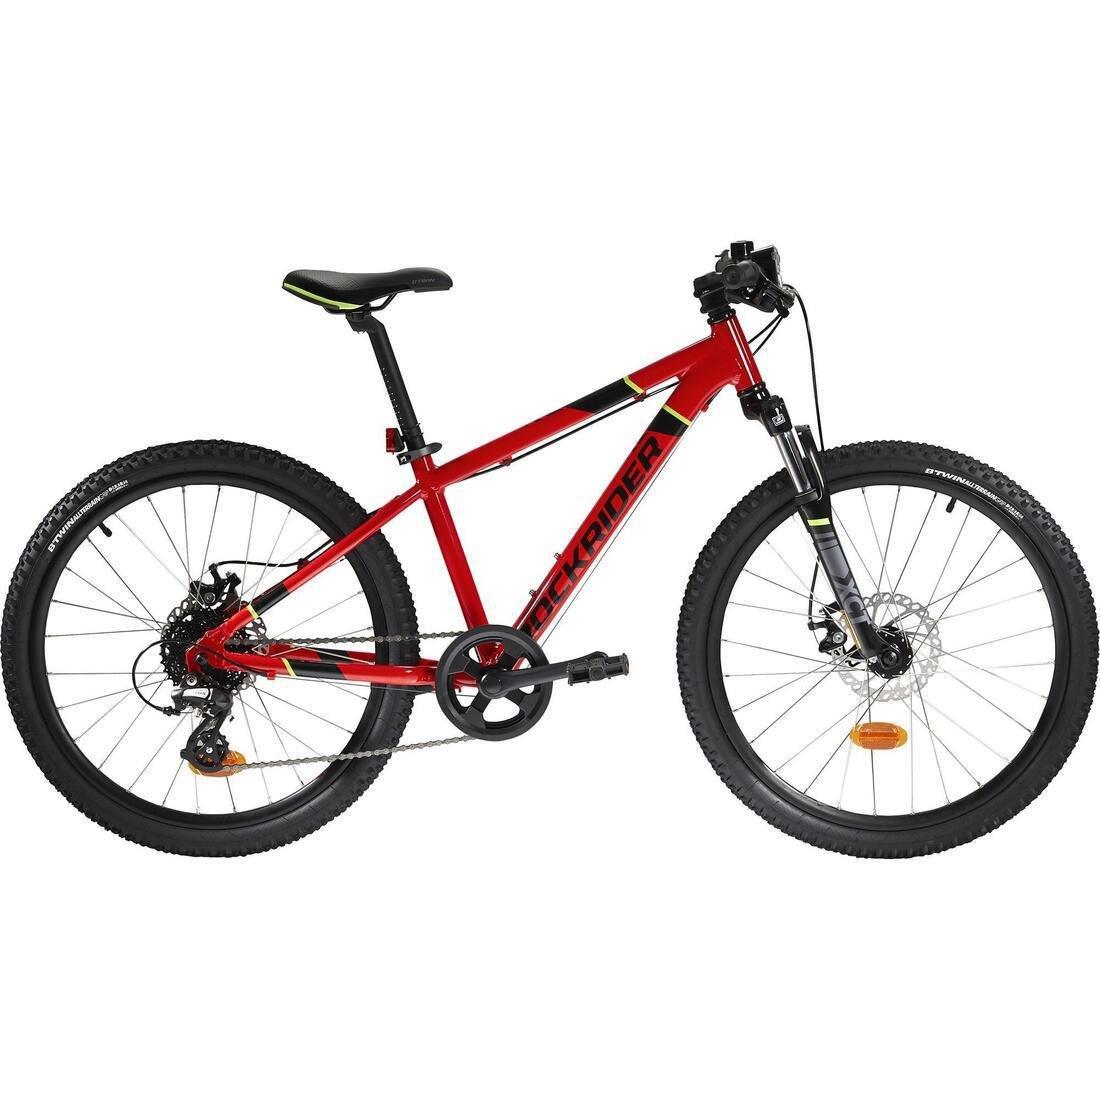 BTWIN - 24 Inch Kids Mountain bike Rockrider ST 900 Alluminium 9-12 Years old - Red, Scarlet red